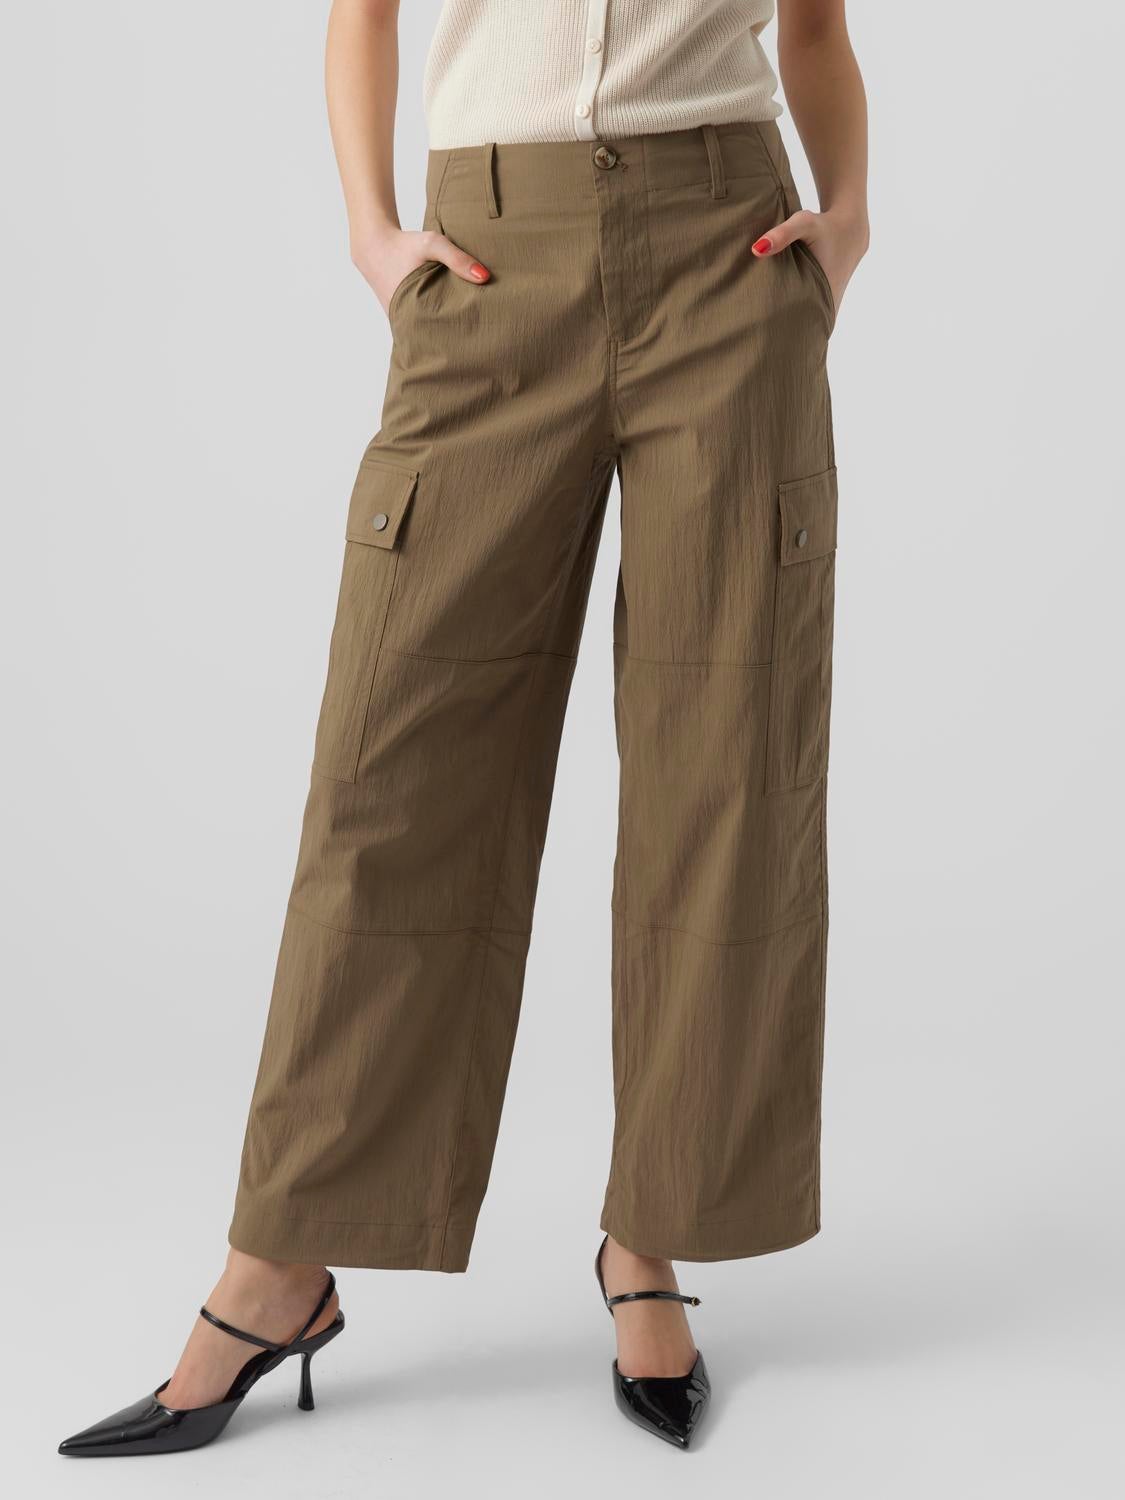 Vero Moda Cally Wide Cargo Pants – One Common